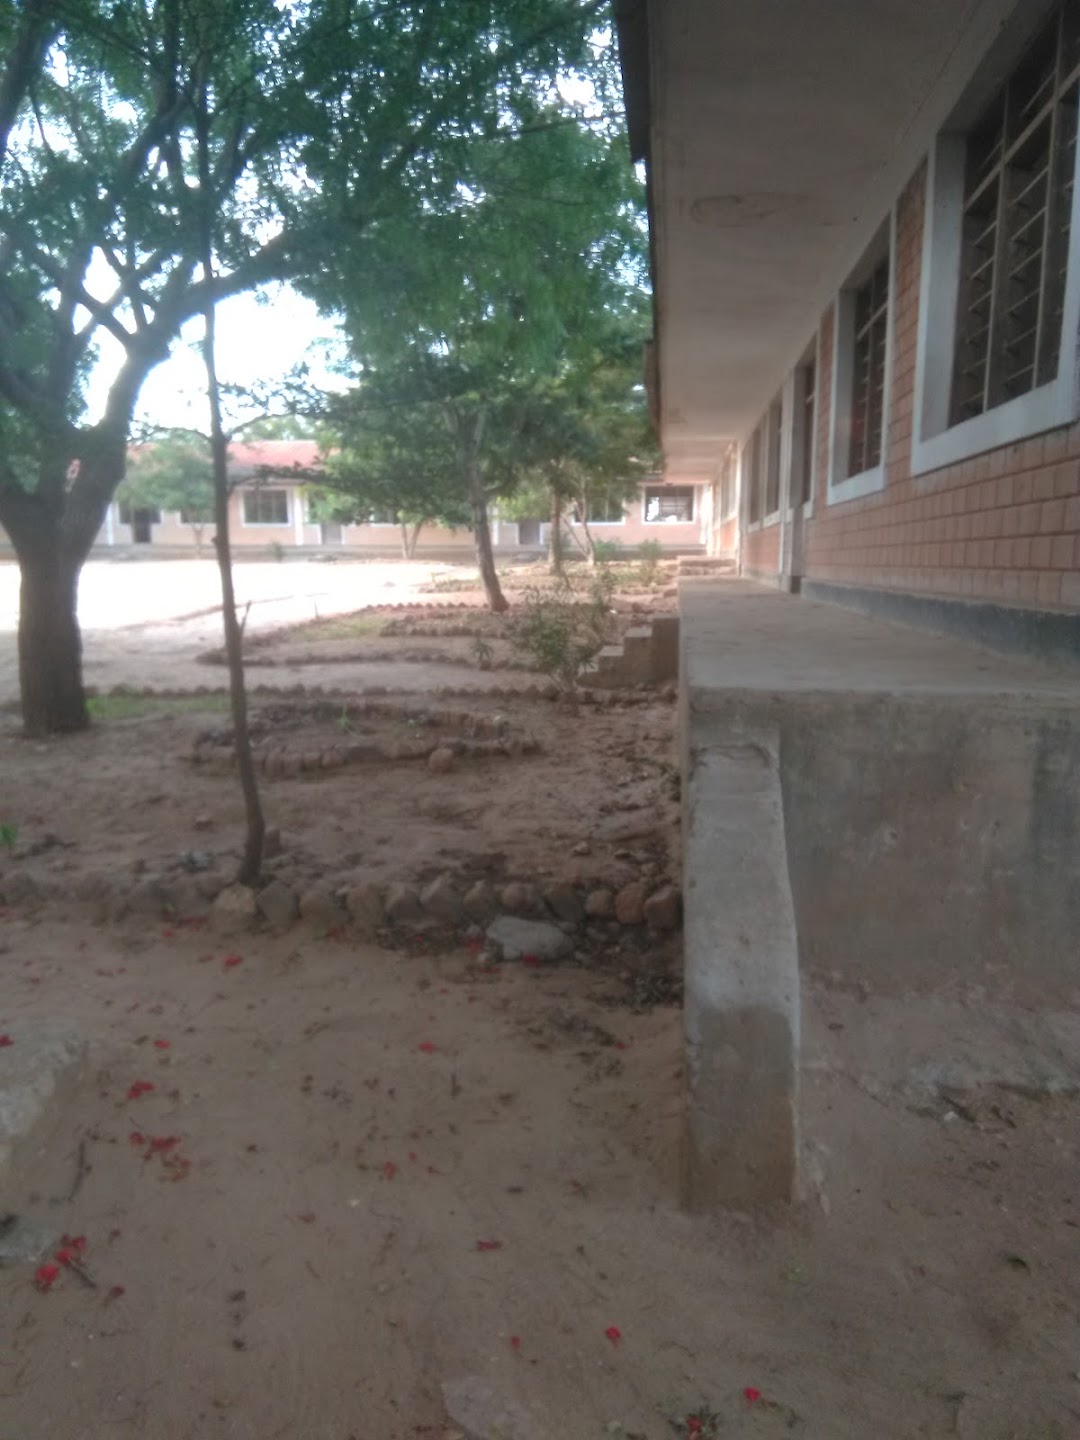 Boko Primary School